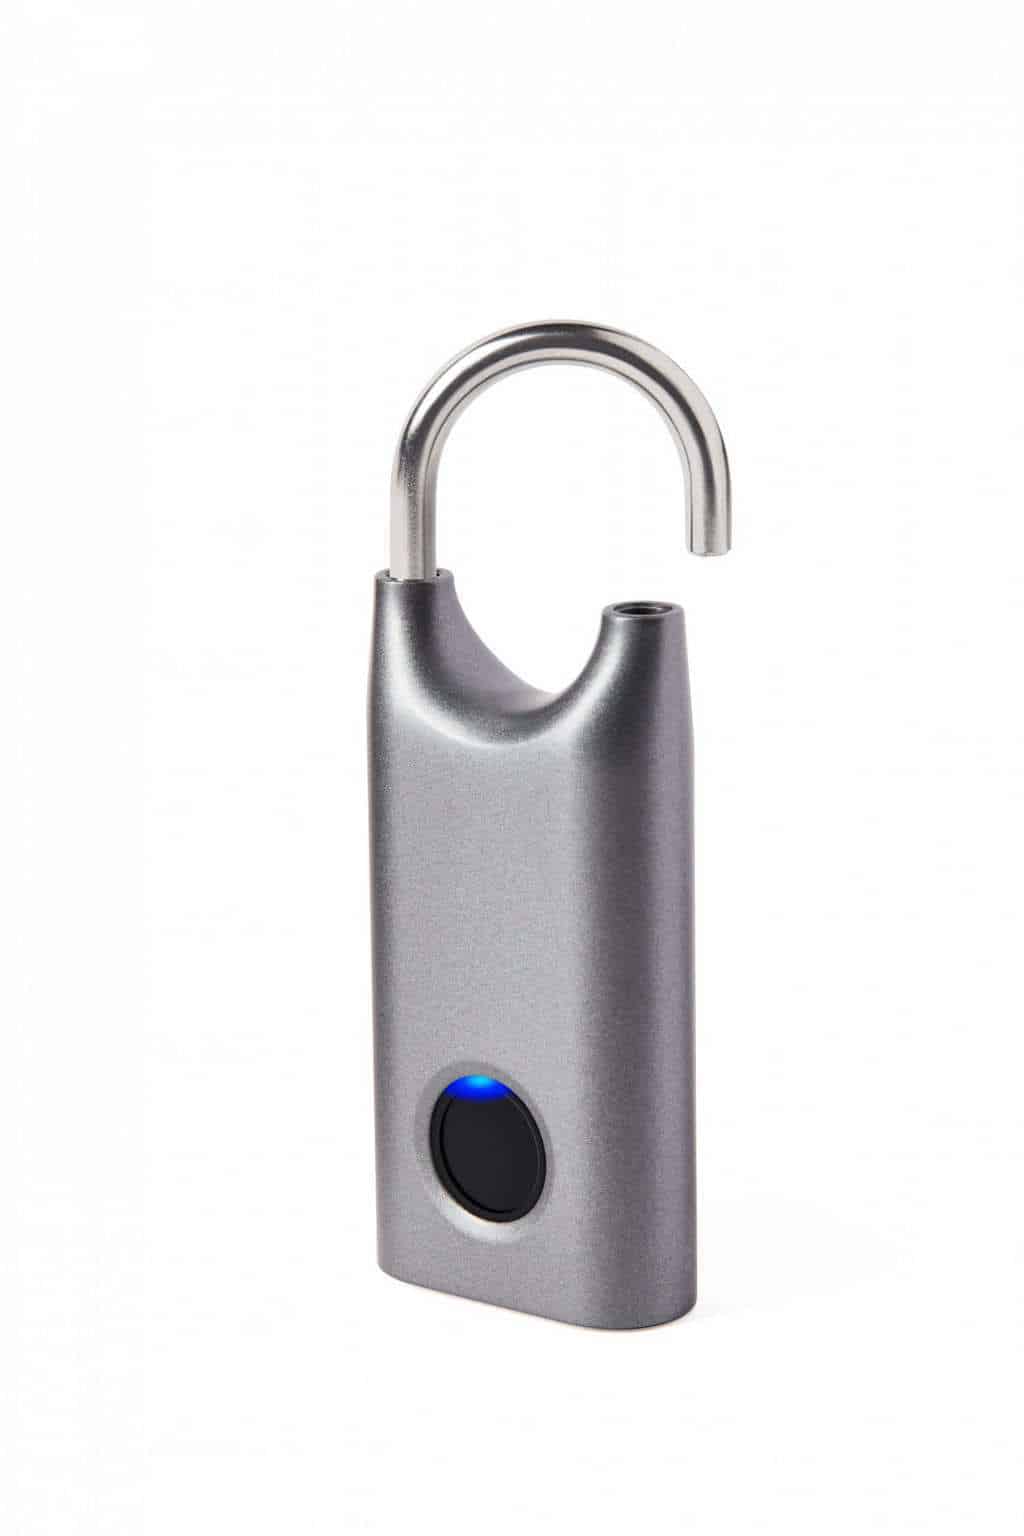 Lexon Design Nomaday Biometric Padlock